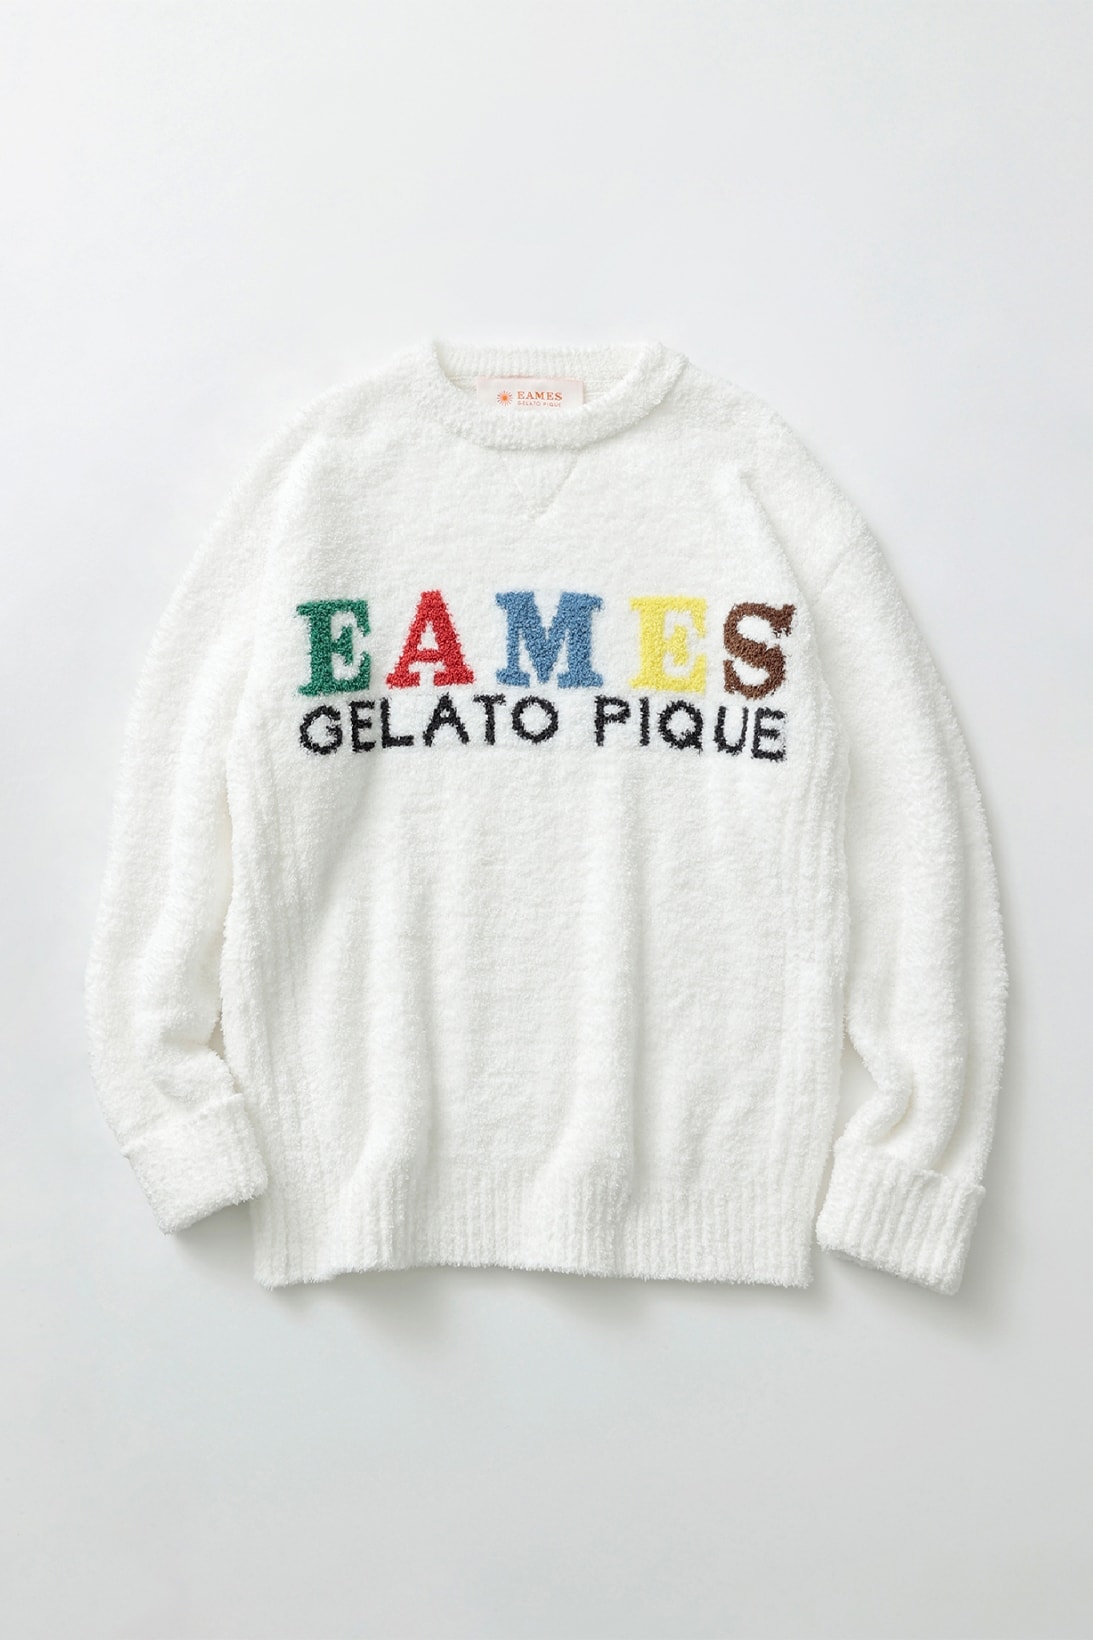 Gelato Pique Eames Home Collection Loungewear Sweater White